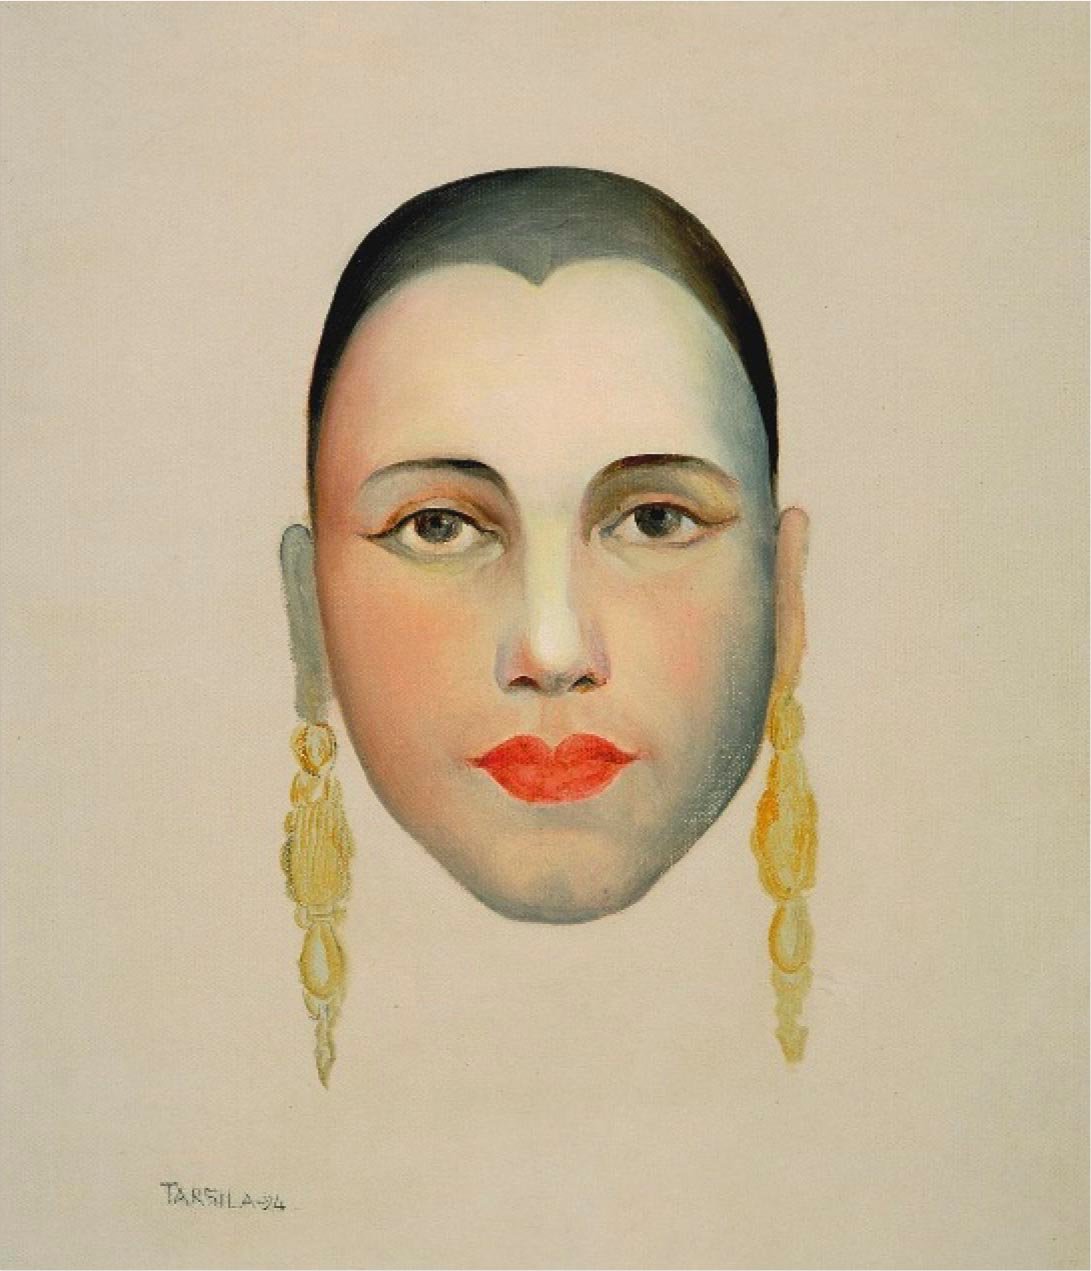 Autorretrato de Tarsila do Amaral, 1924.